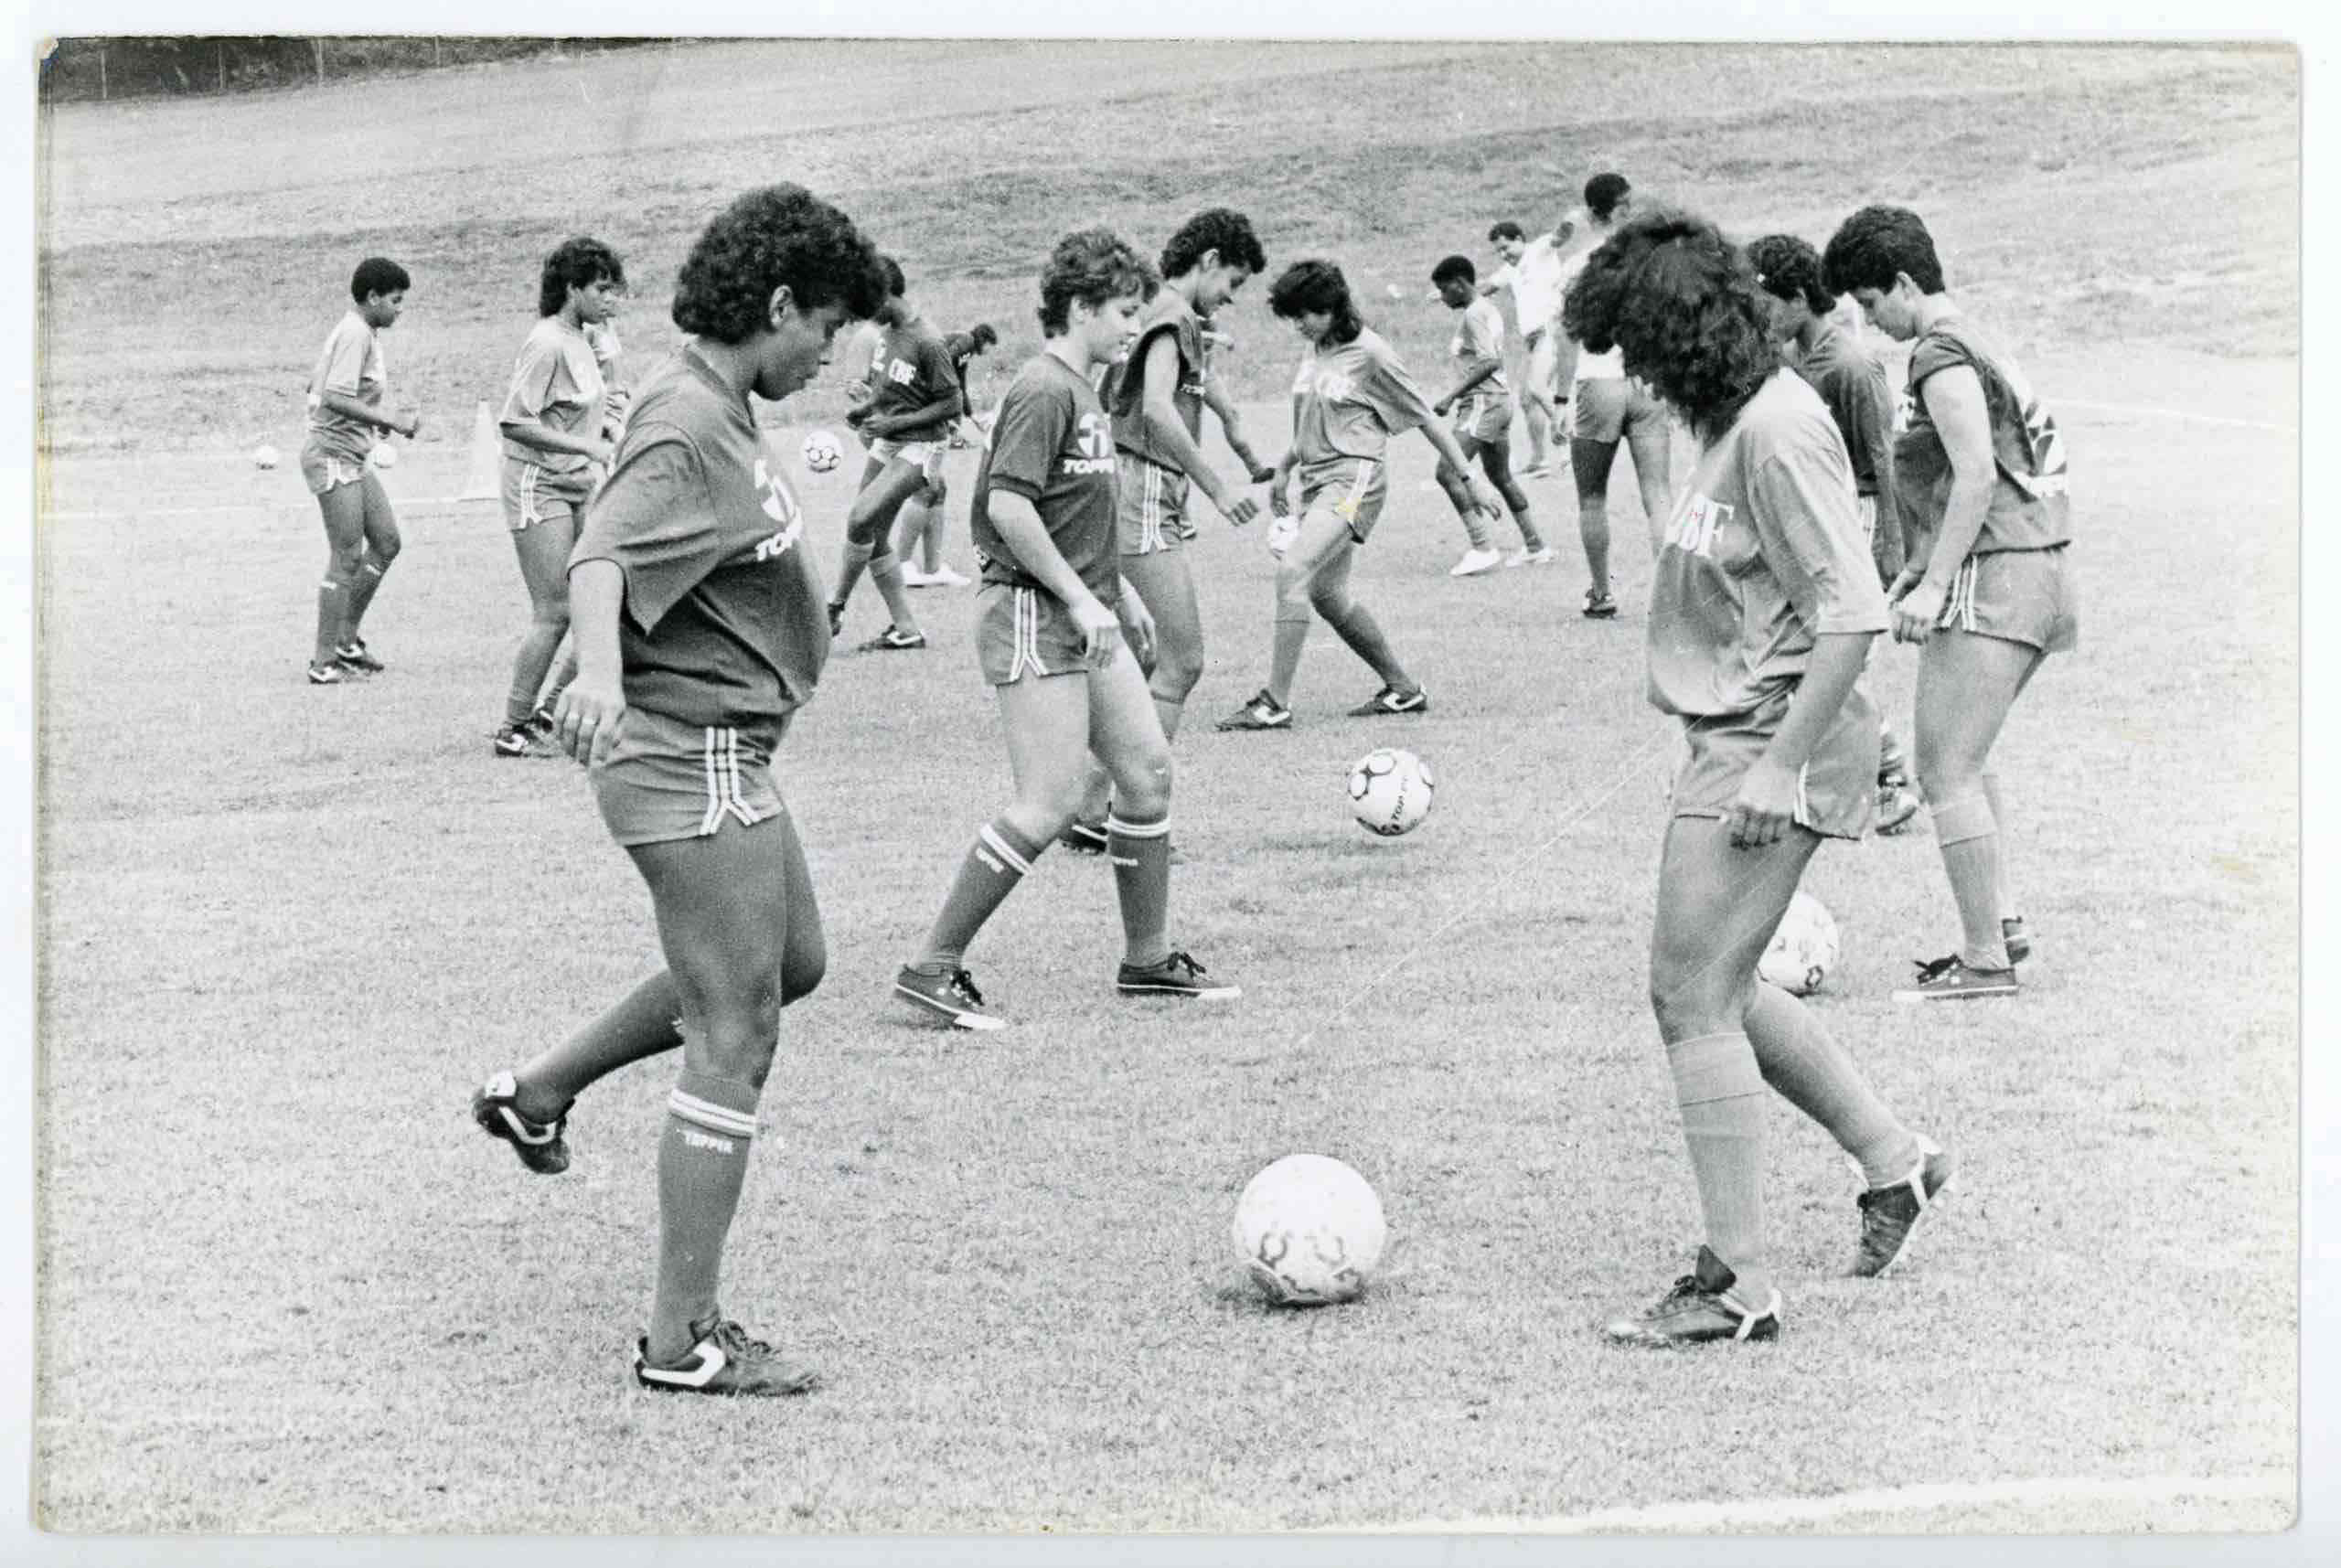 Mostra traz a luta da mulher no futebol e a história da Copa feminina